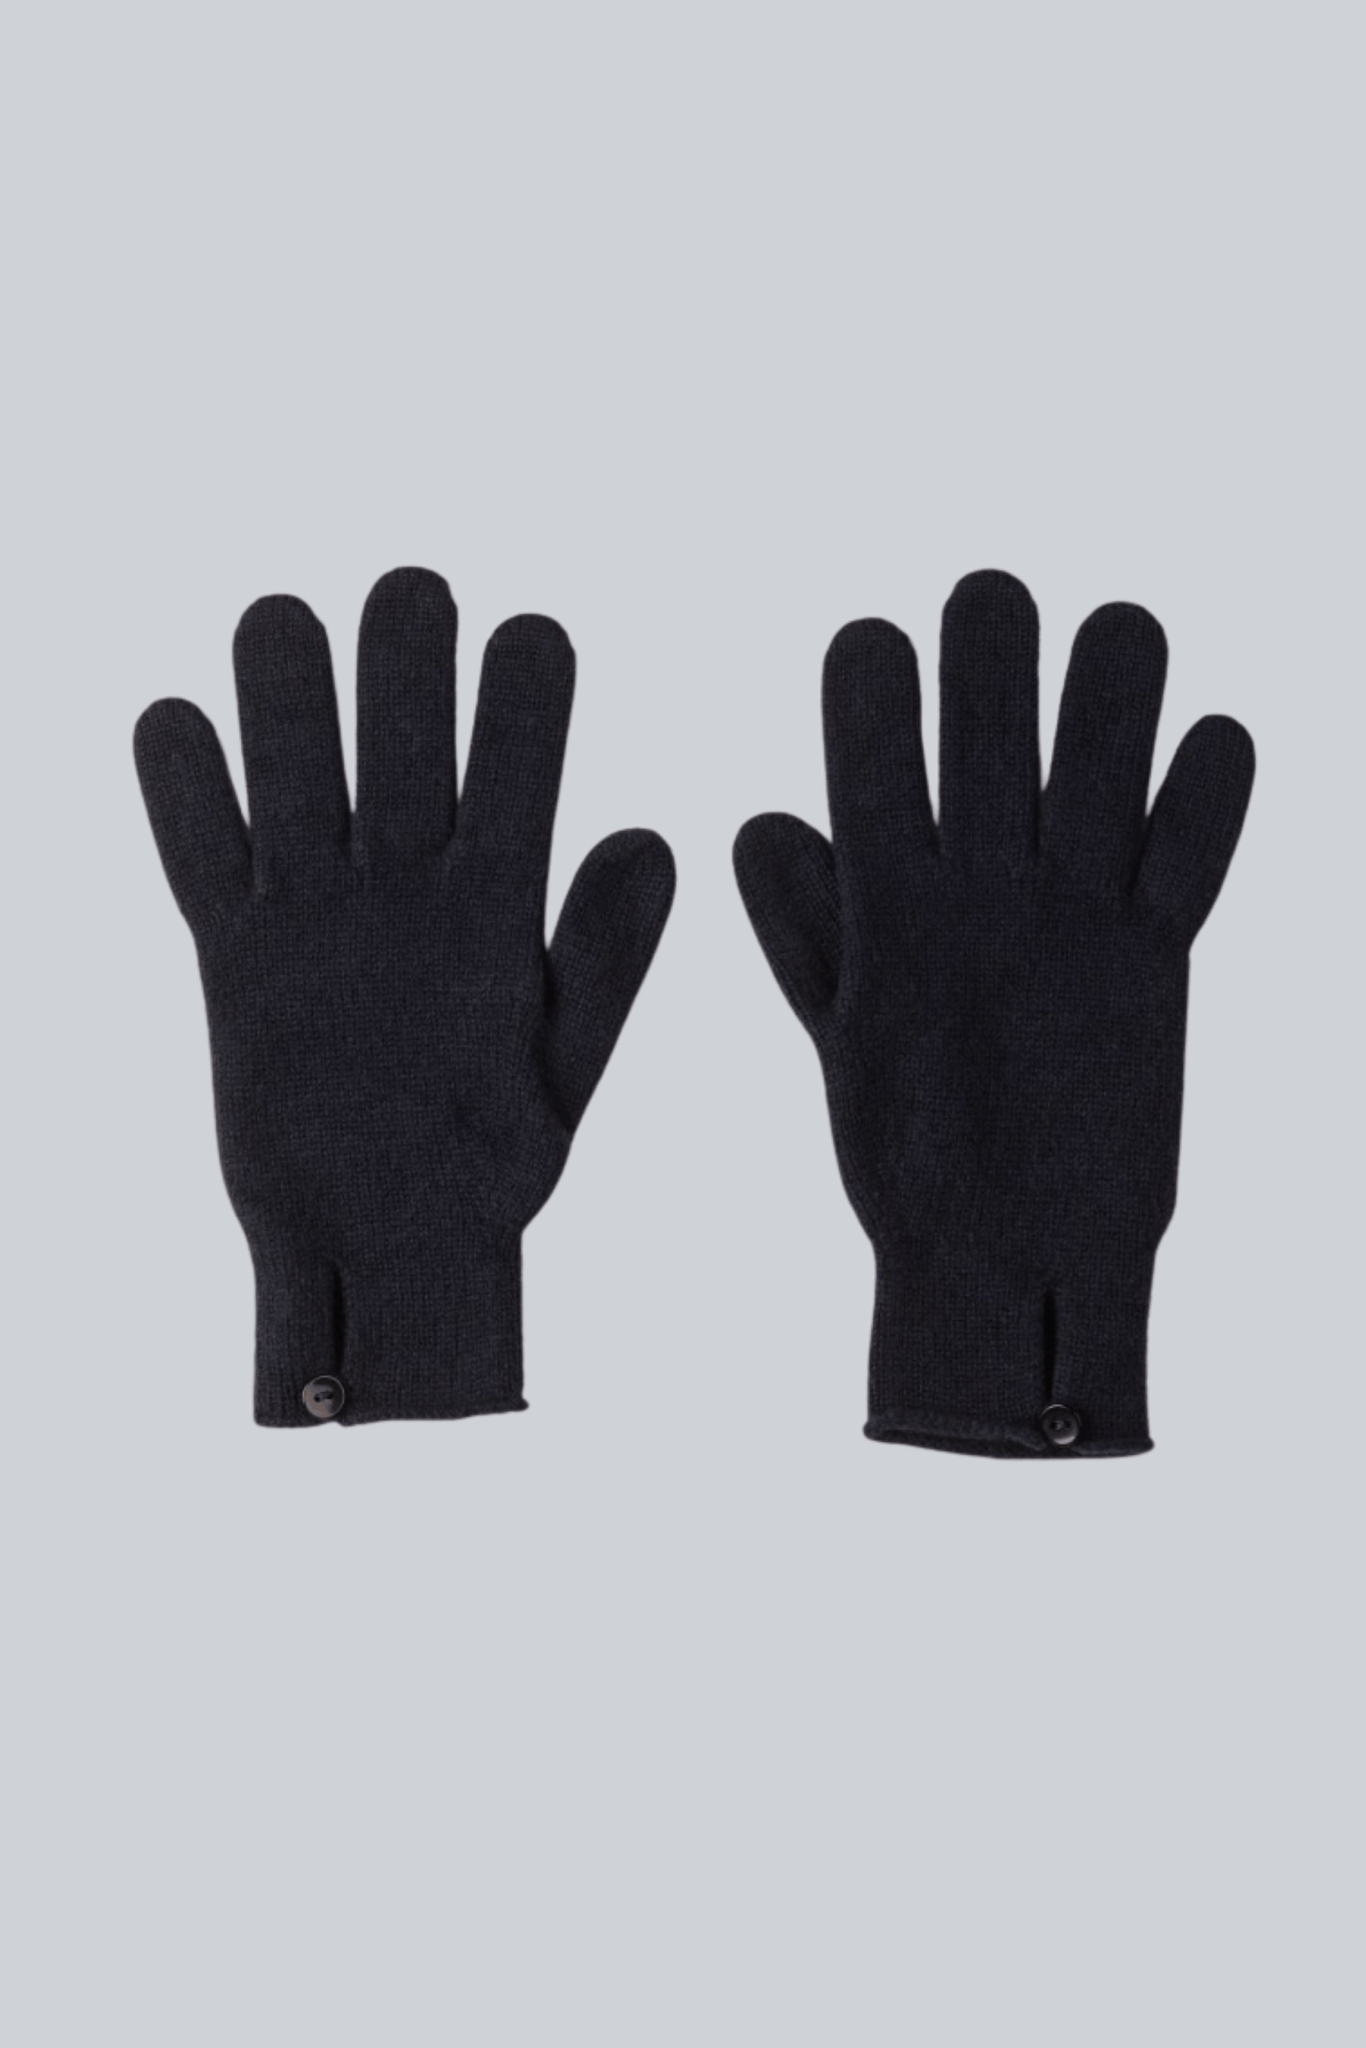 Scottish Cashmere Button Gloves - Women's Navy Cashmere Gloves - Soft Gloves - Luxury Accessories Lavender Hill Clothing